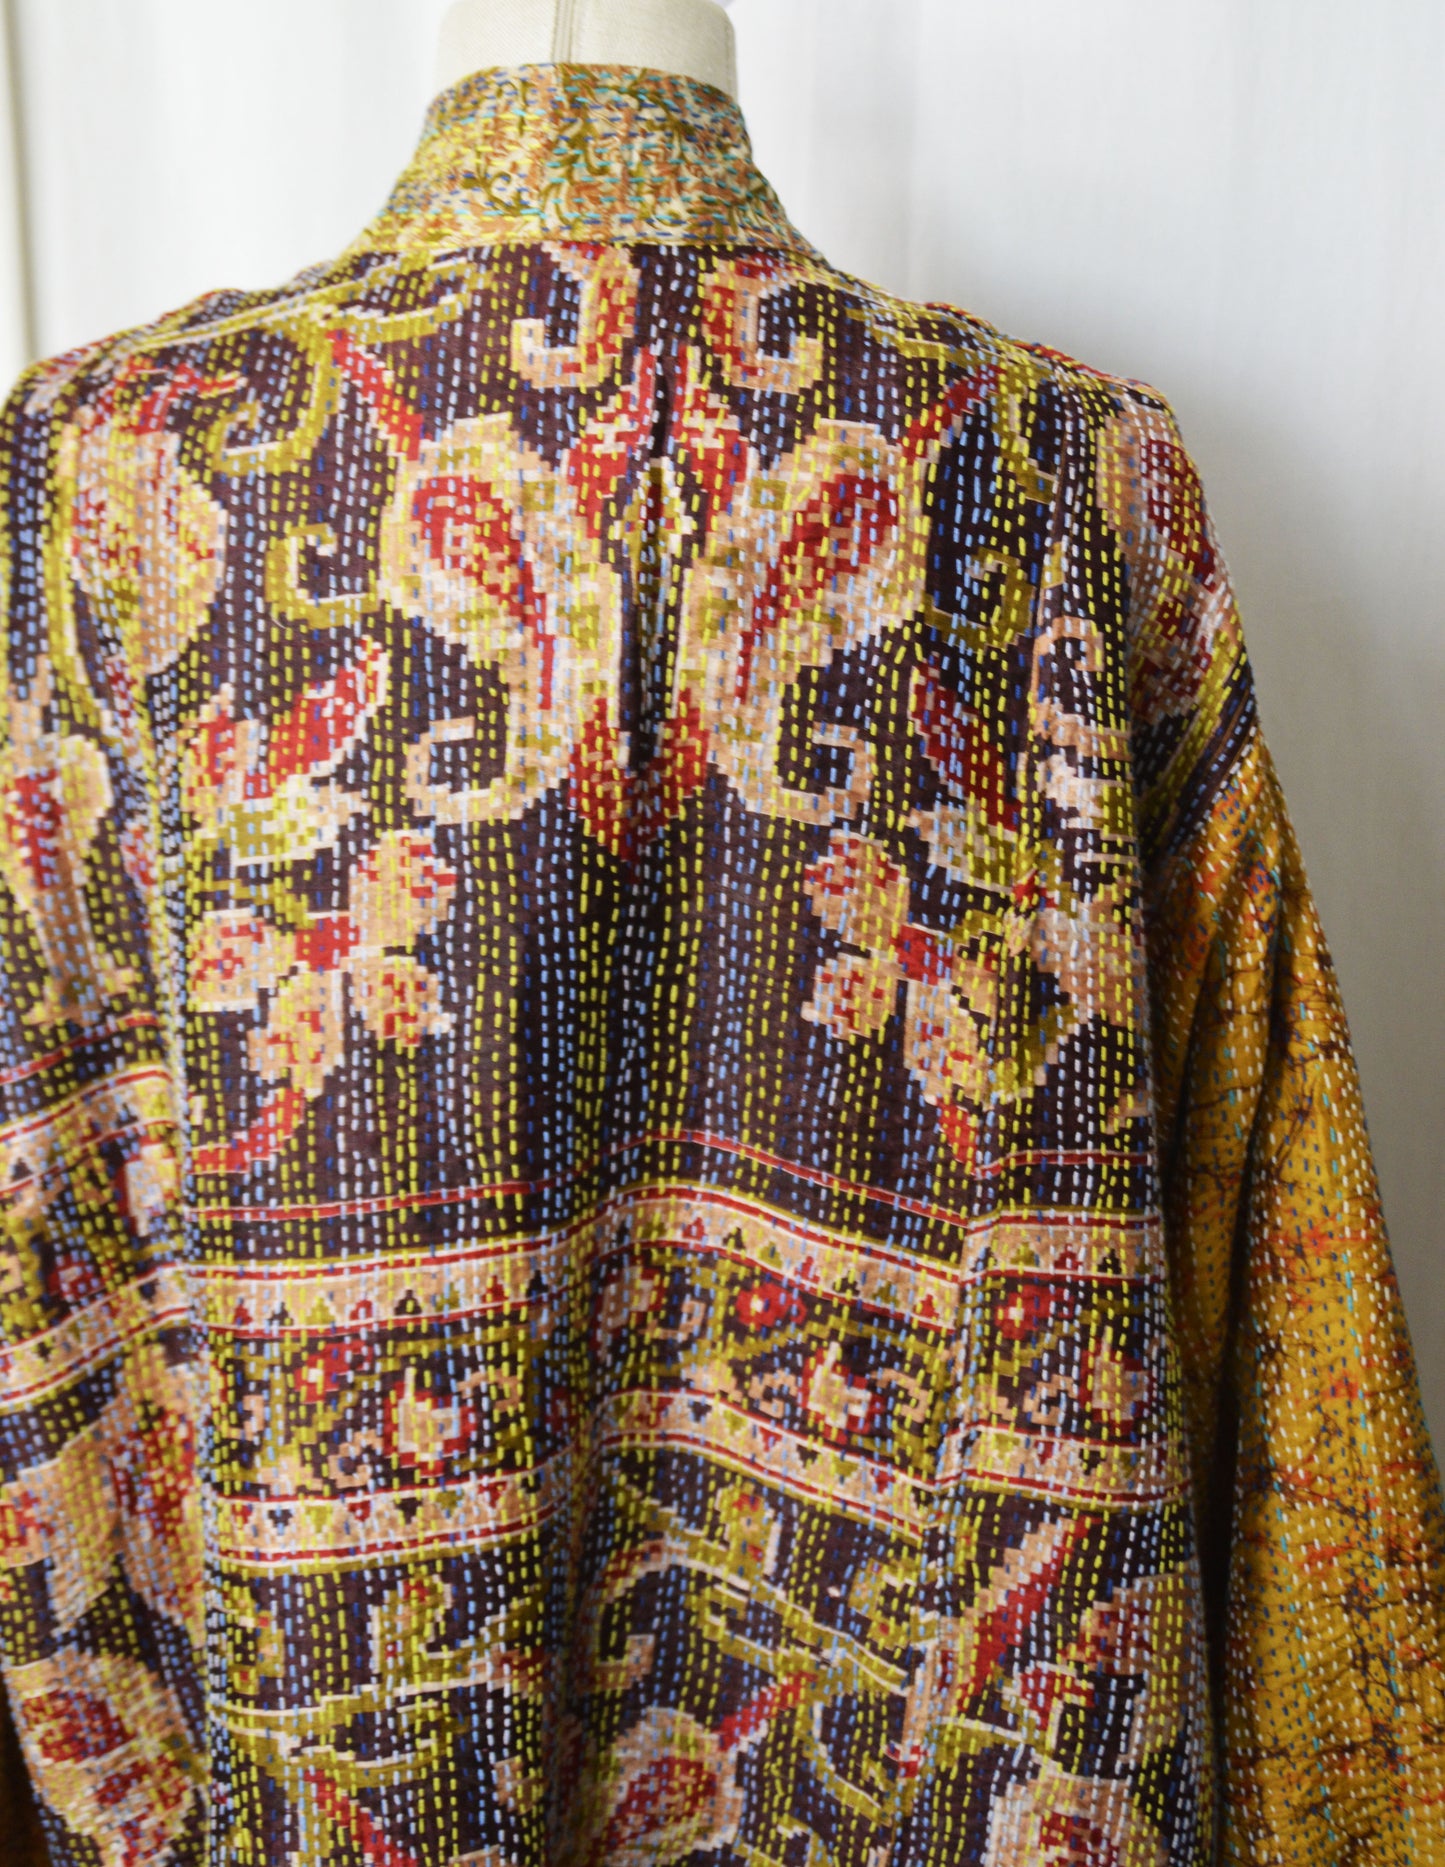 Veste kimono réversible en SOIE recyclée